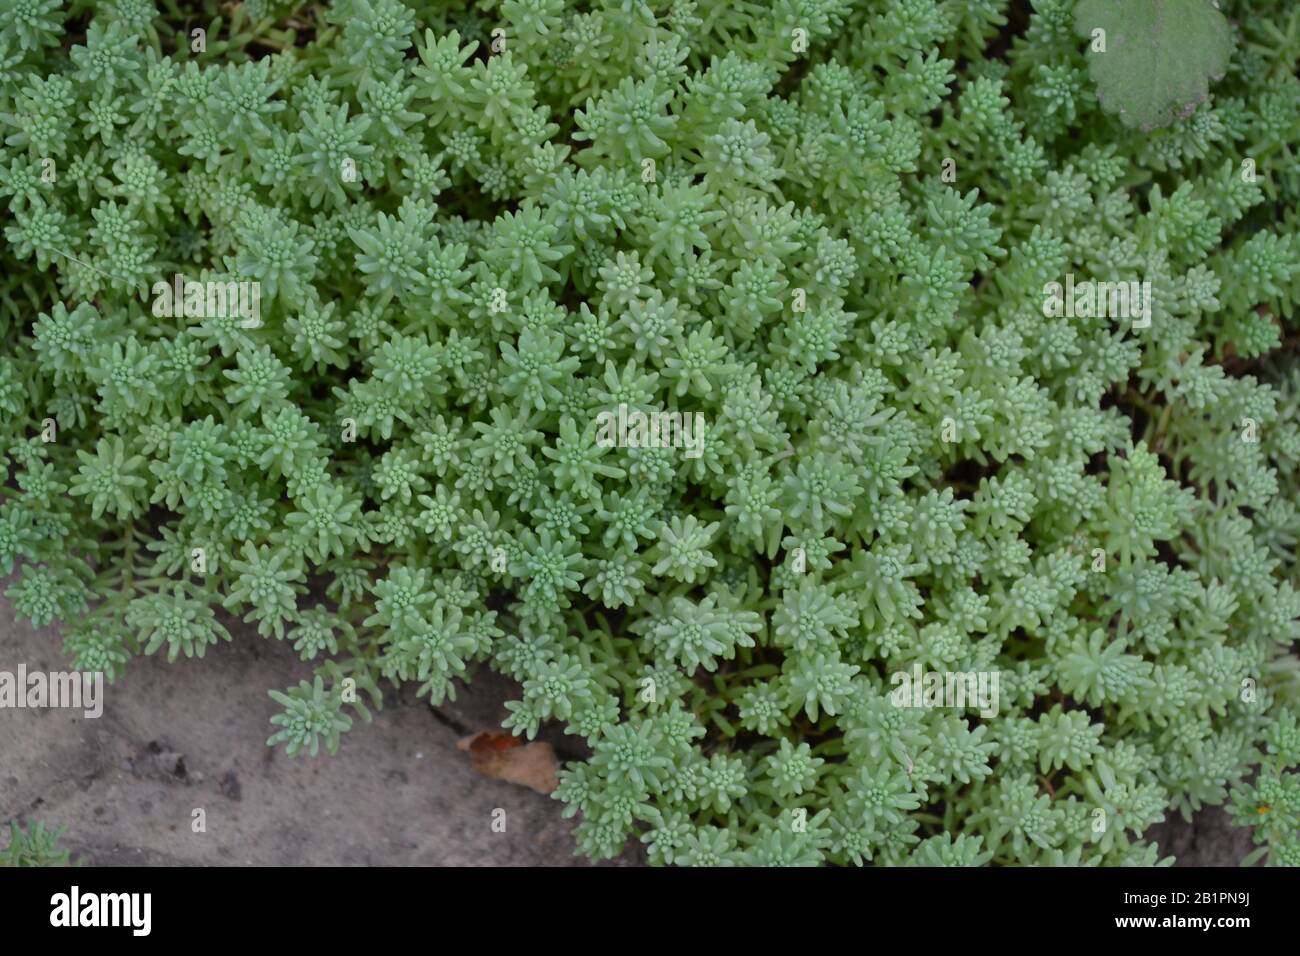 Hare cabbage. Stonecrop.  Sedum. Green moss. Decorative grassy carpet. Green flower bed decoration. Garden. A beautiful tender plant. Horizontal photo Stock Photo